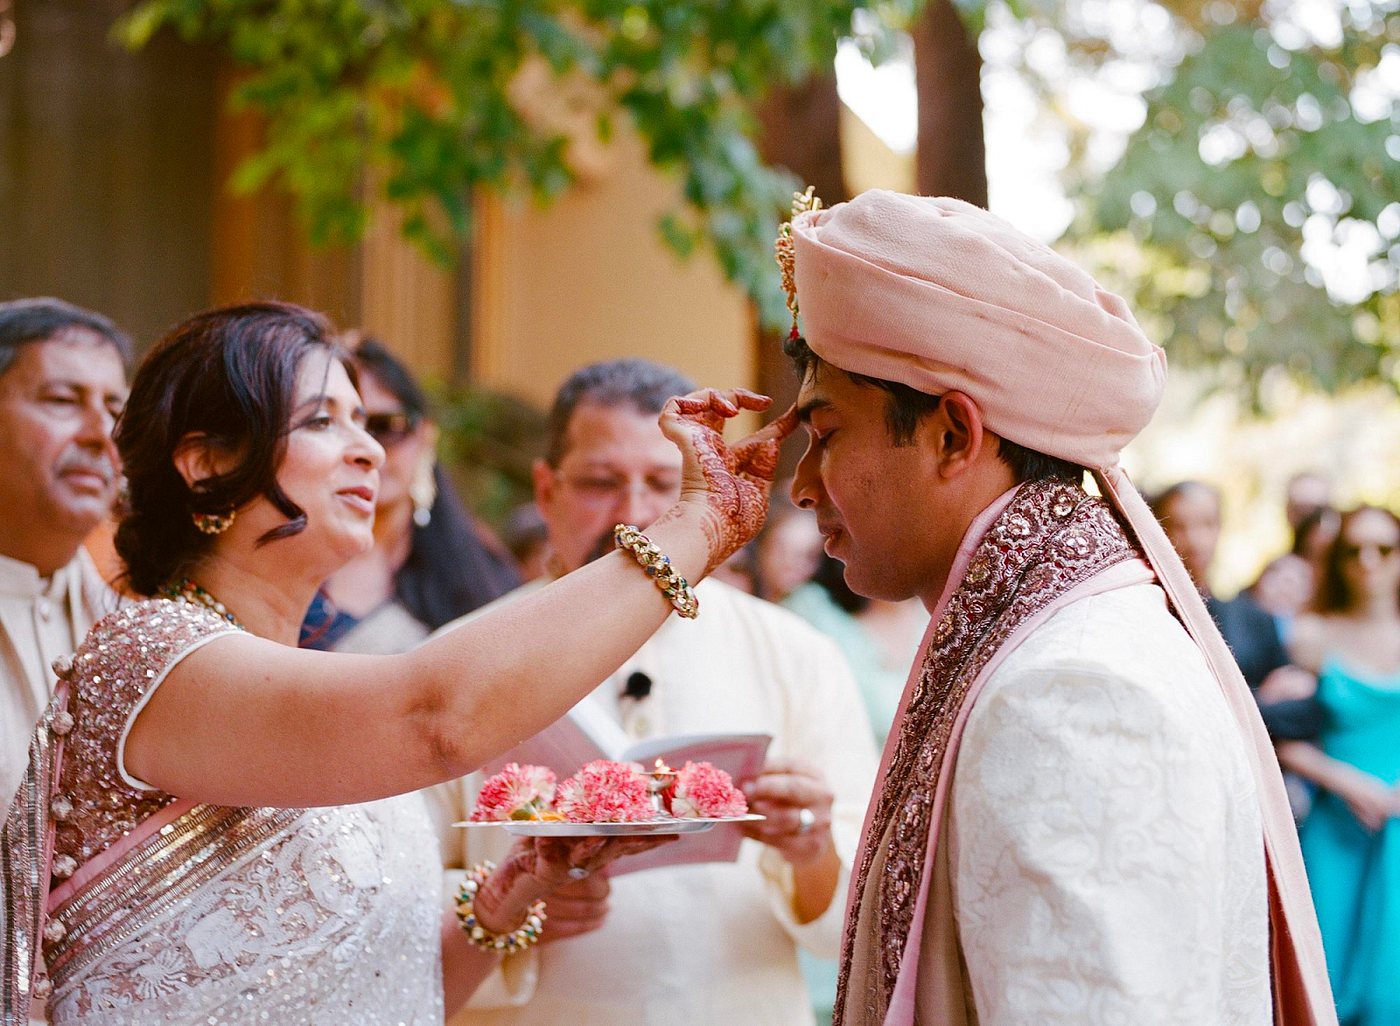 5 Hindu Wedding Traditions  Montgomery and Bucks County Hindu